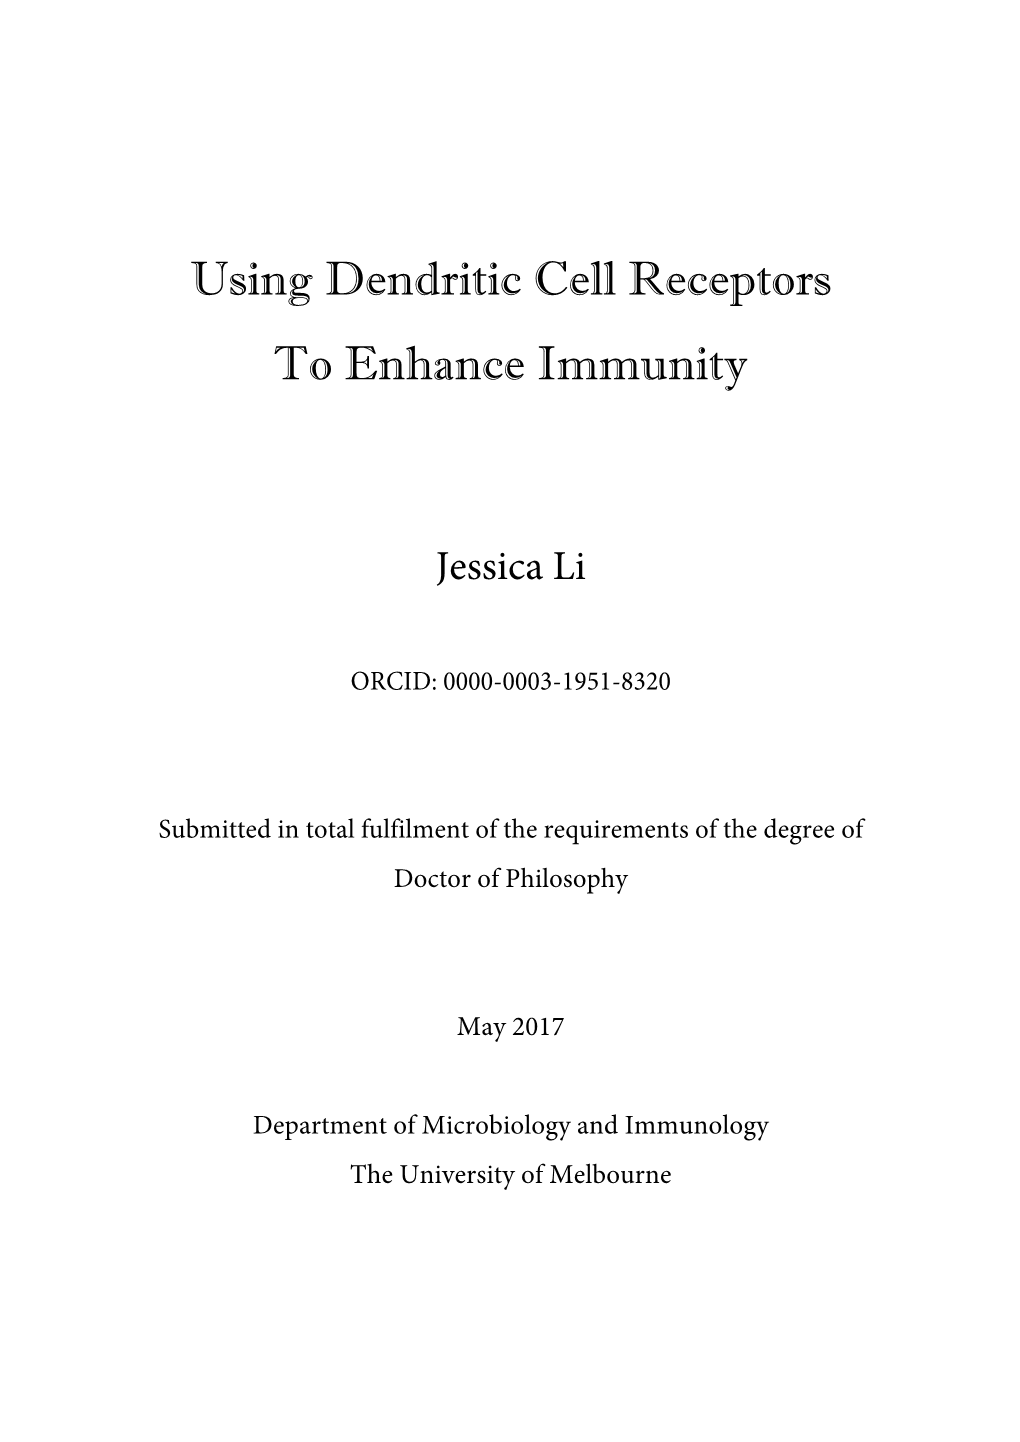 Using Dendritic Cell Receptors to Enhance Immunity